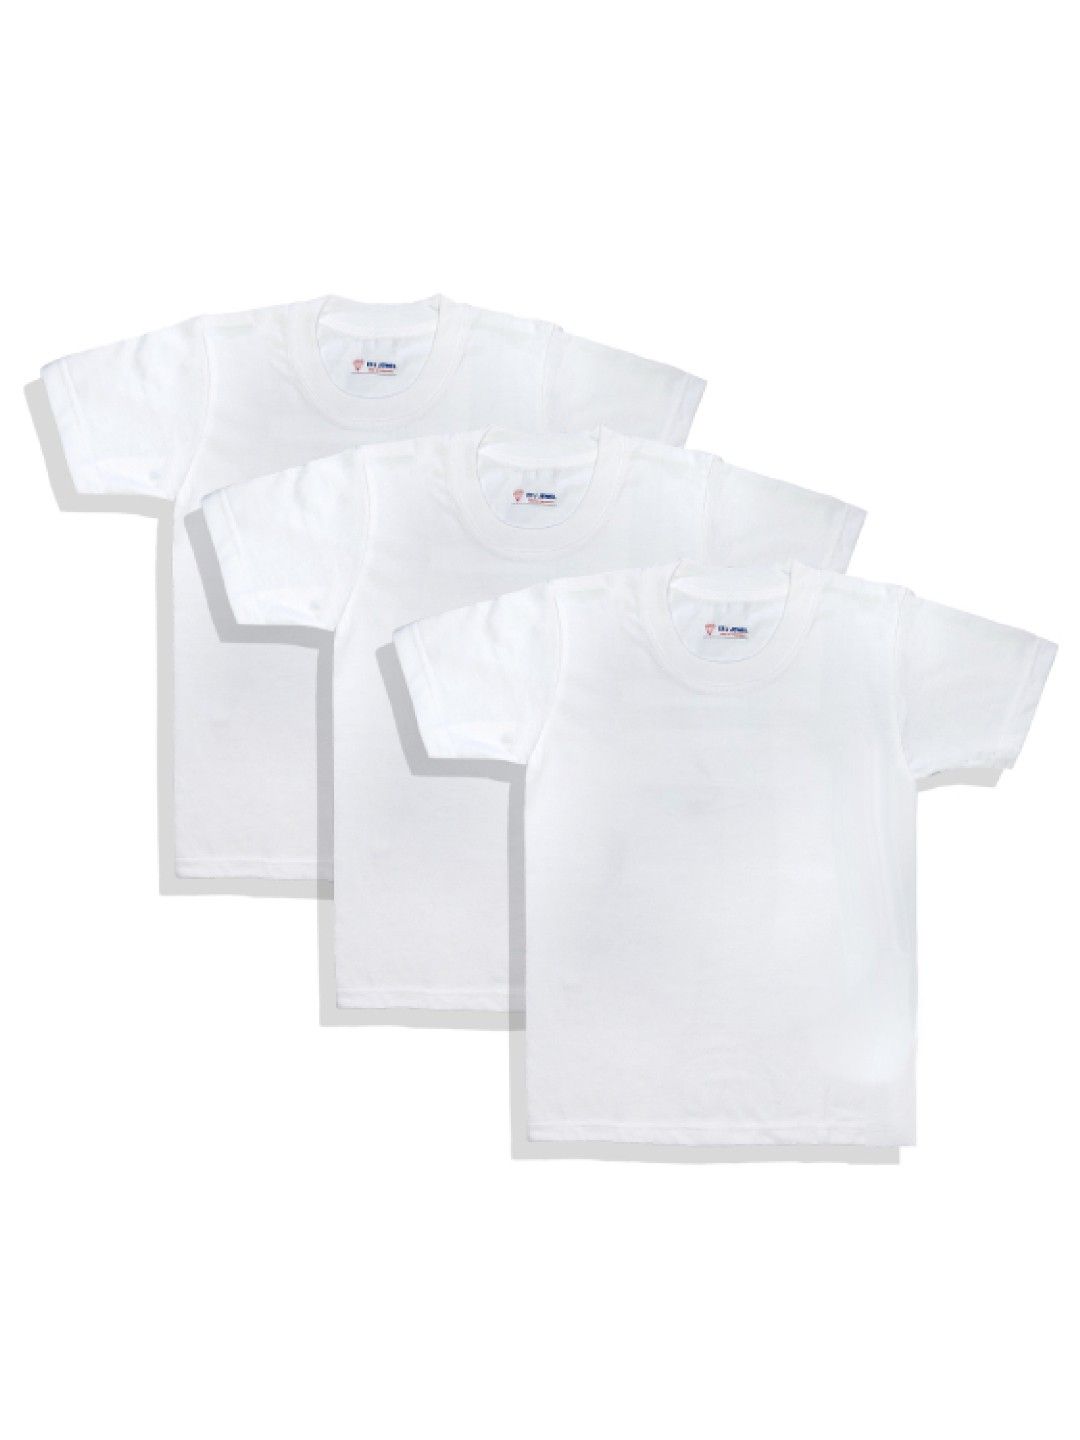 Cottonkind 3-Piece Tshirt for Kids